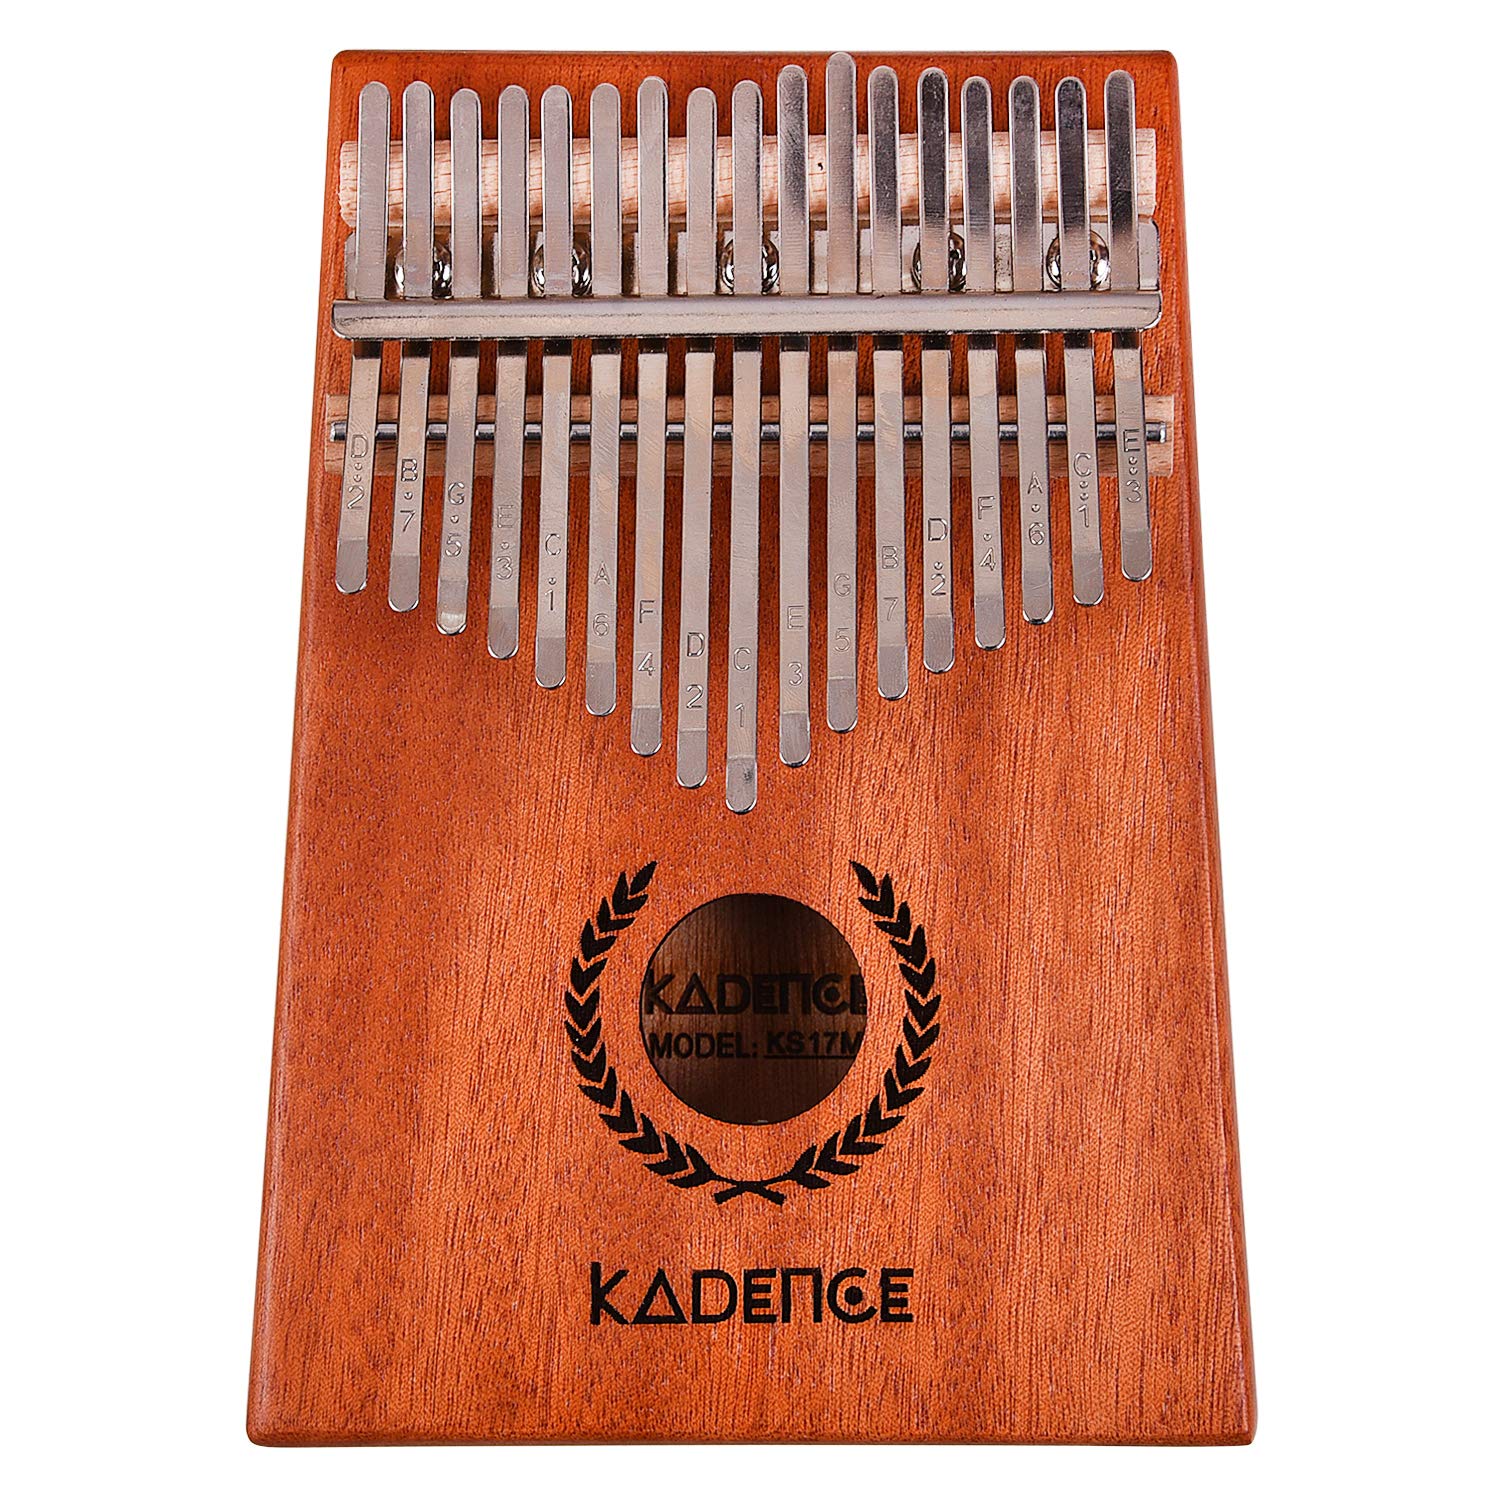 Kalimba bag xylophone Double row thumb piano 24keys professional vibraphone  Musical instrument portable key board marimba Padauk